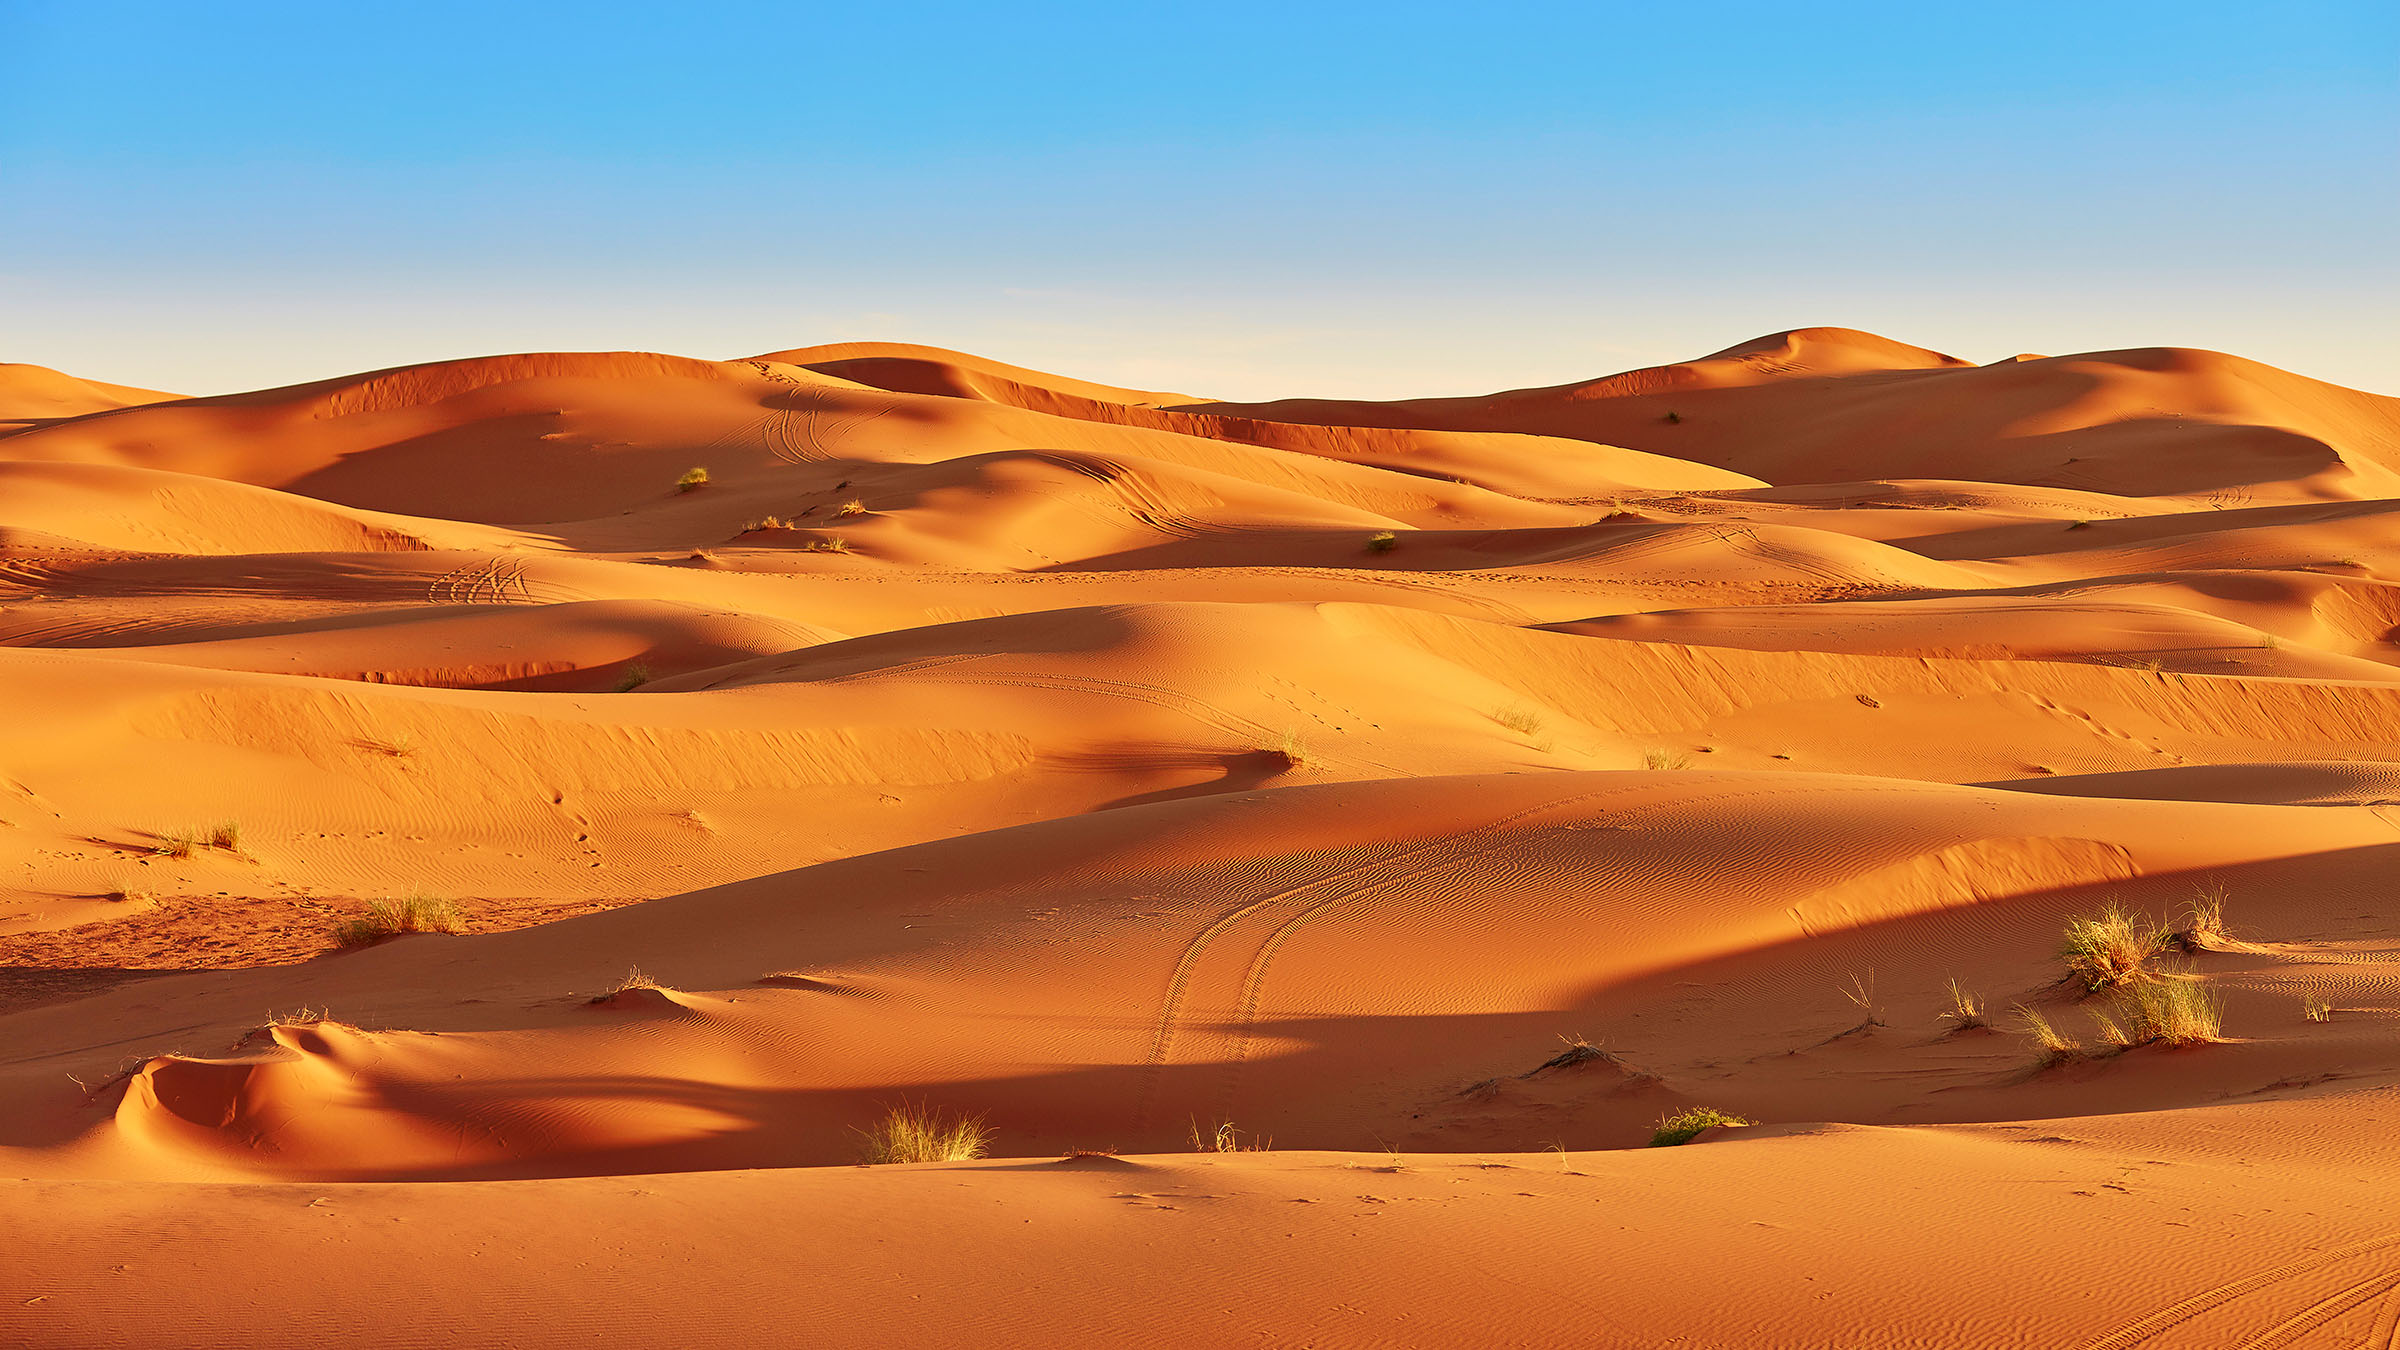  Desert  HD Wallpaper  Background Image 2400x1350 ID 